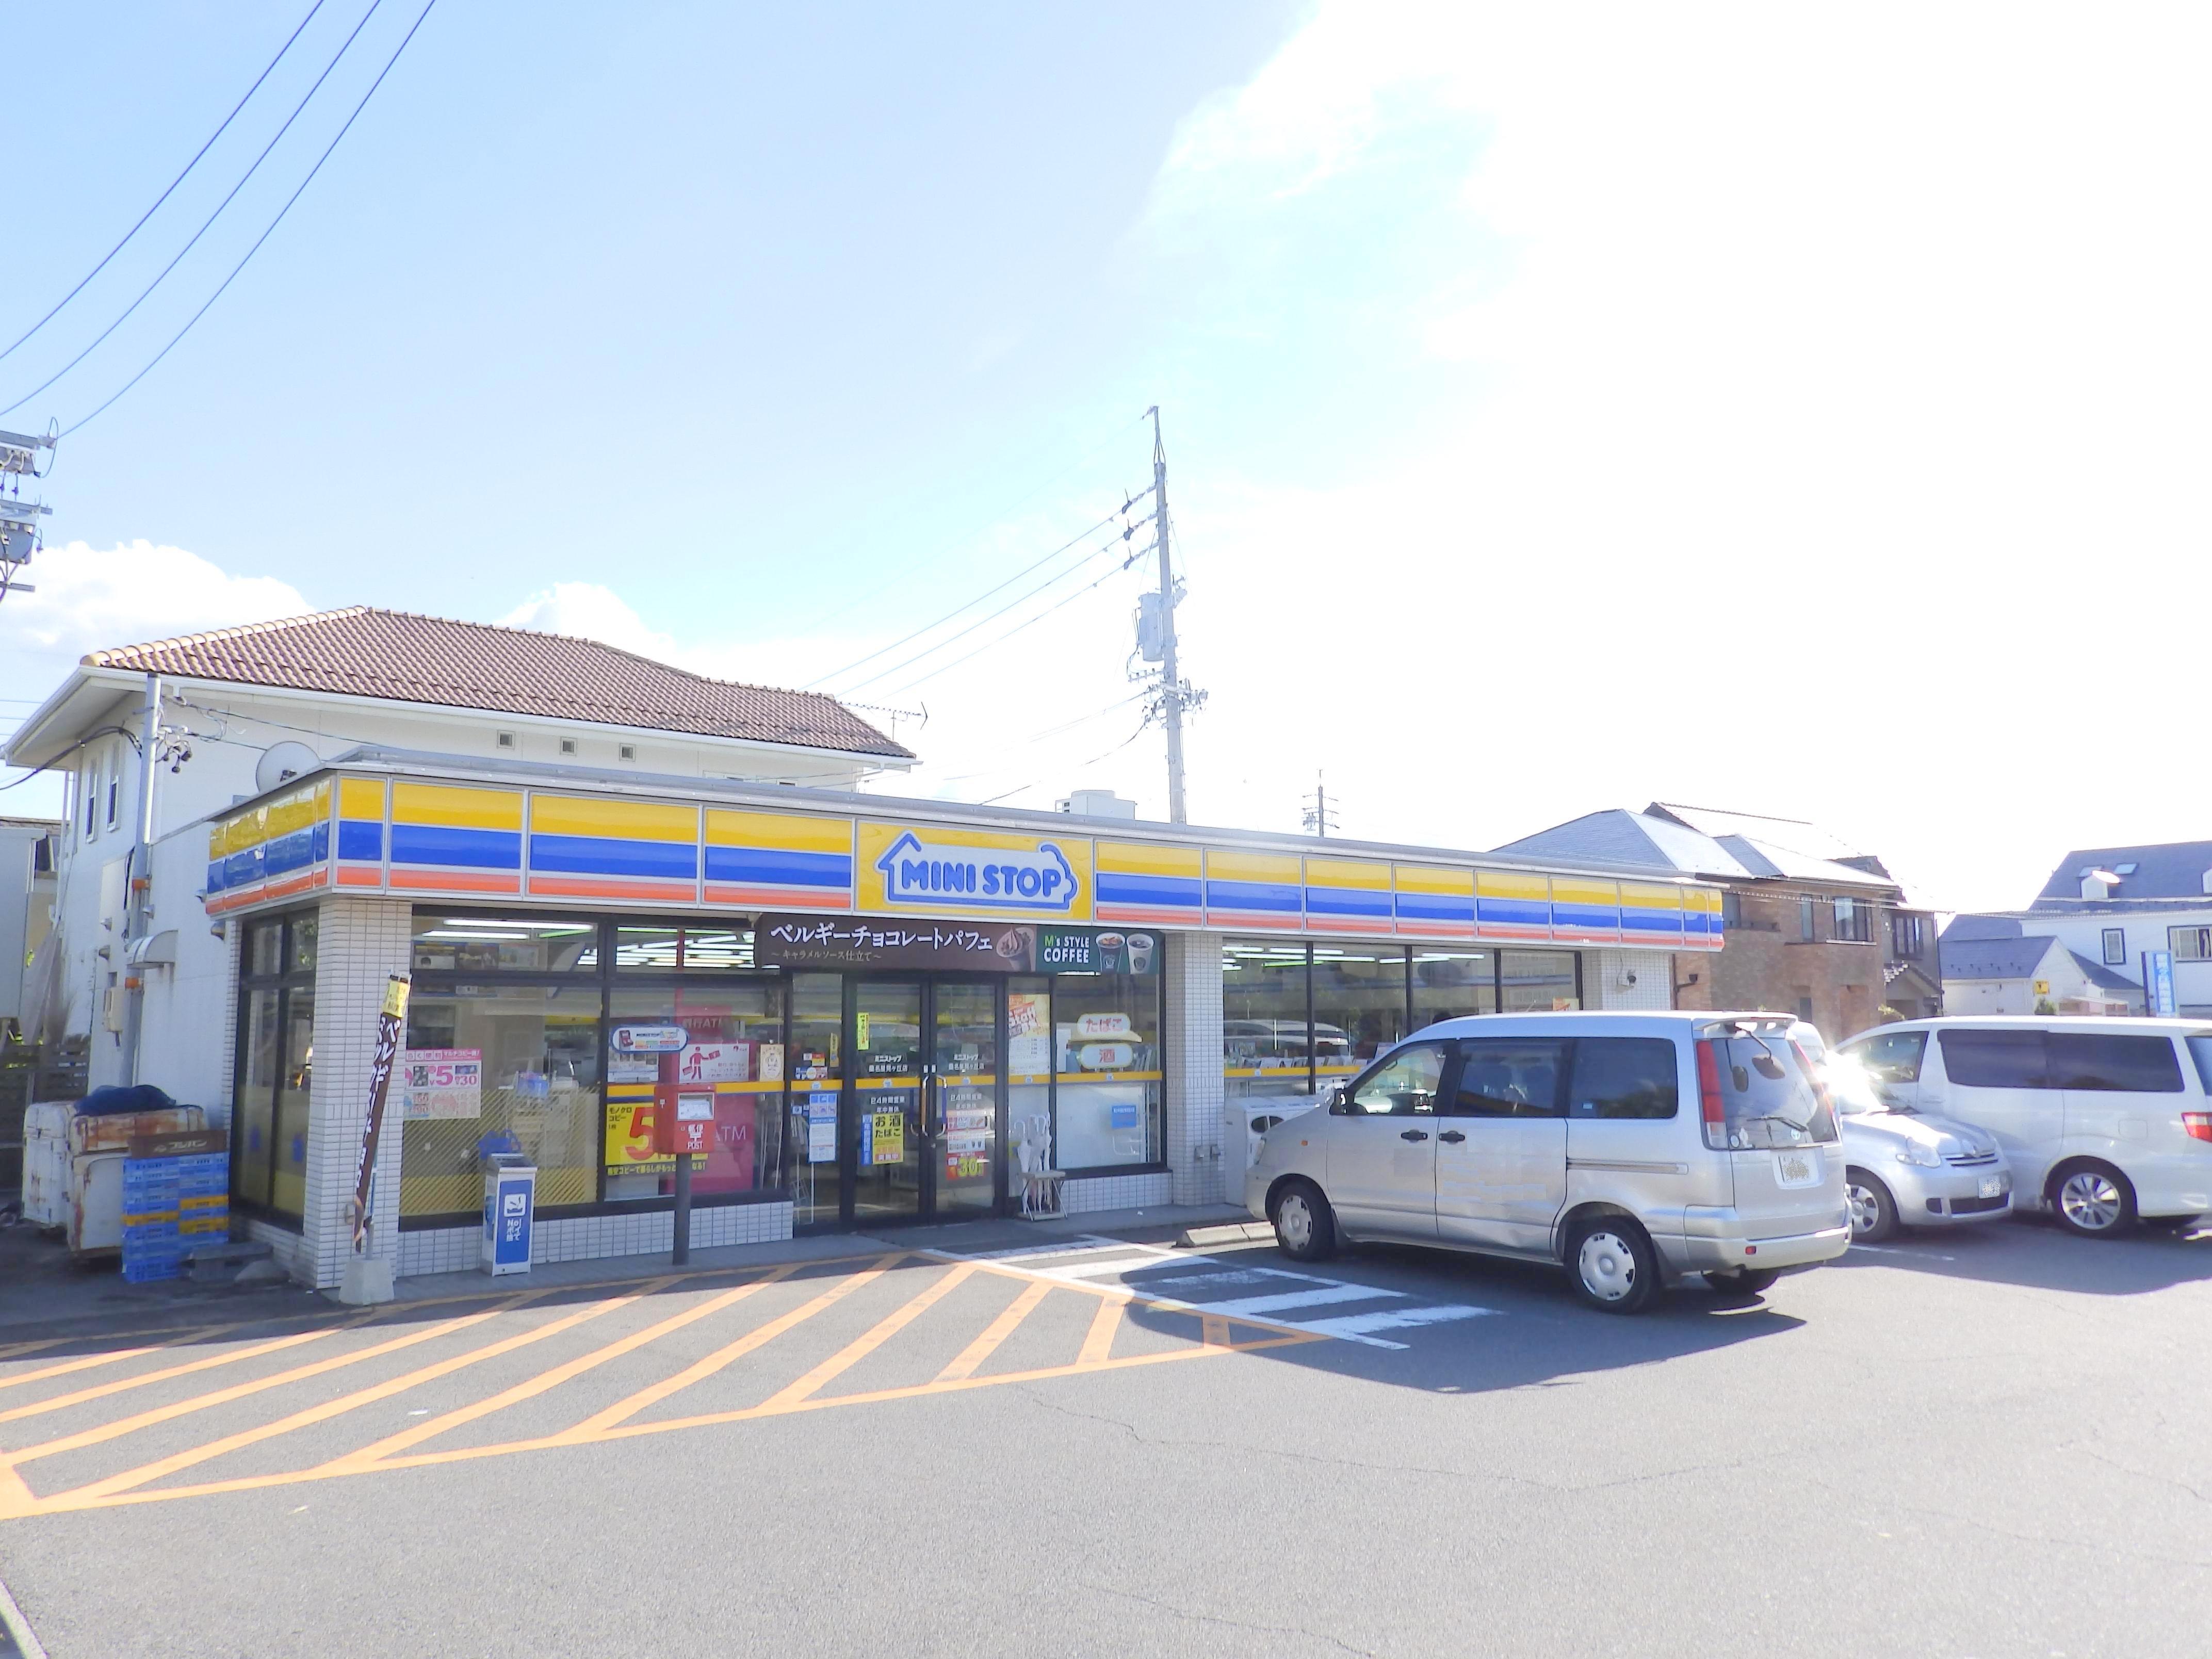 Convenience store. MINISTOP Hoshimi Ke Okaten (convenience store) to 139m